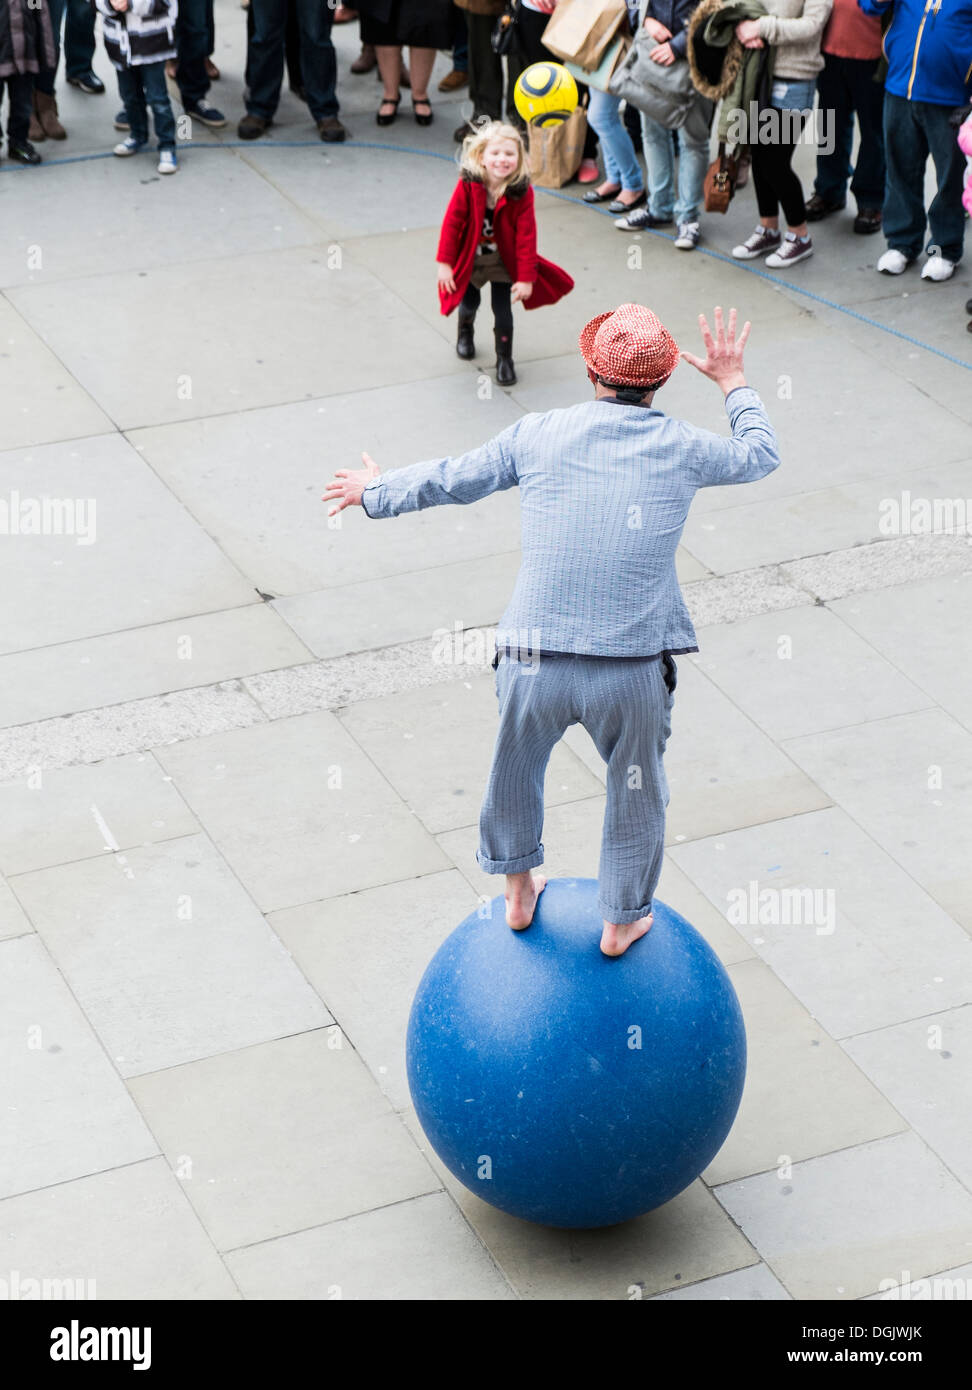 A Street Performer unterhaltsam Menschen in London. Stockfoto